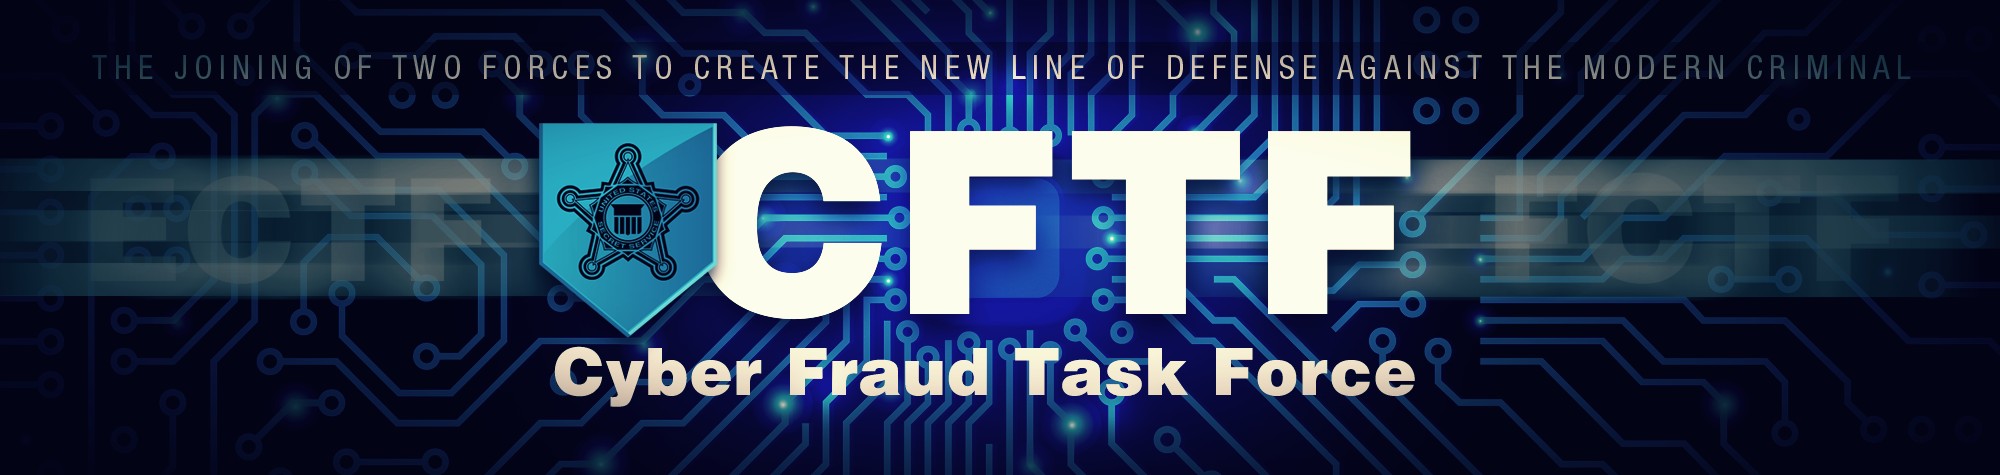 US Secret Service creates new Cyber Fraud Task Force